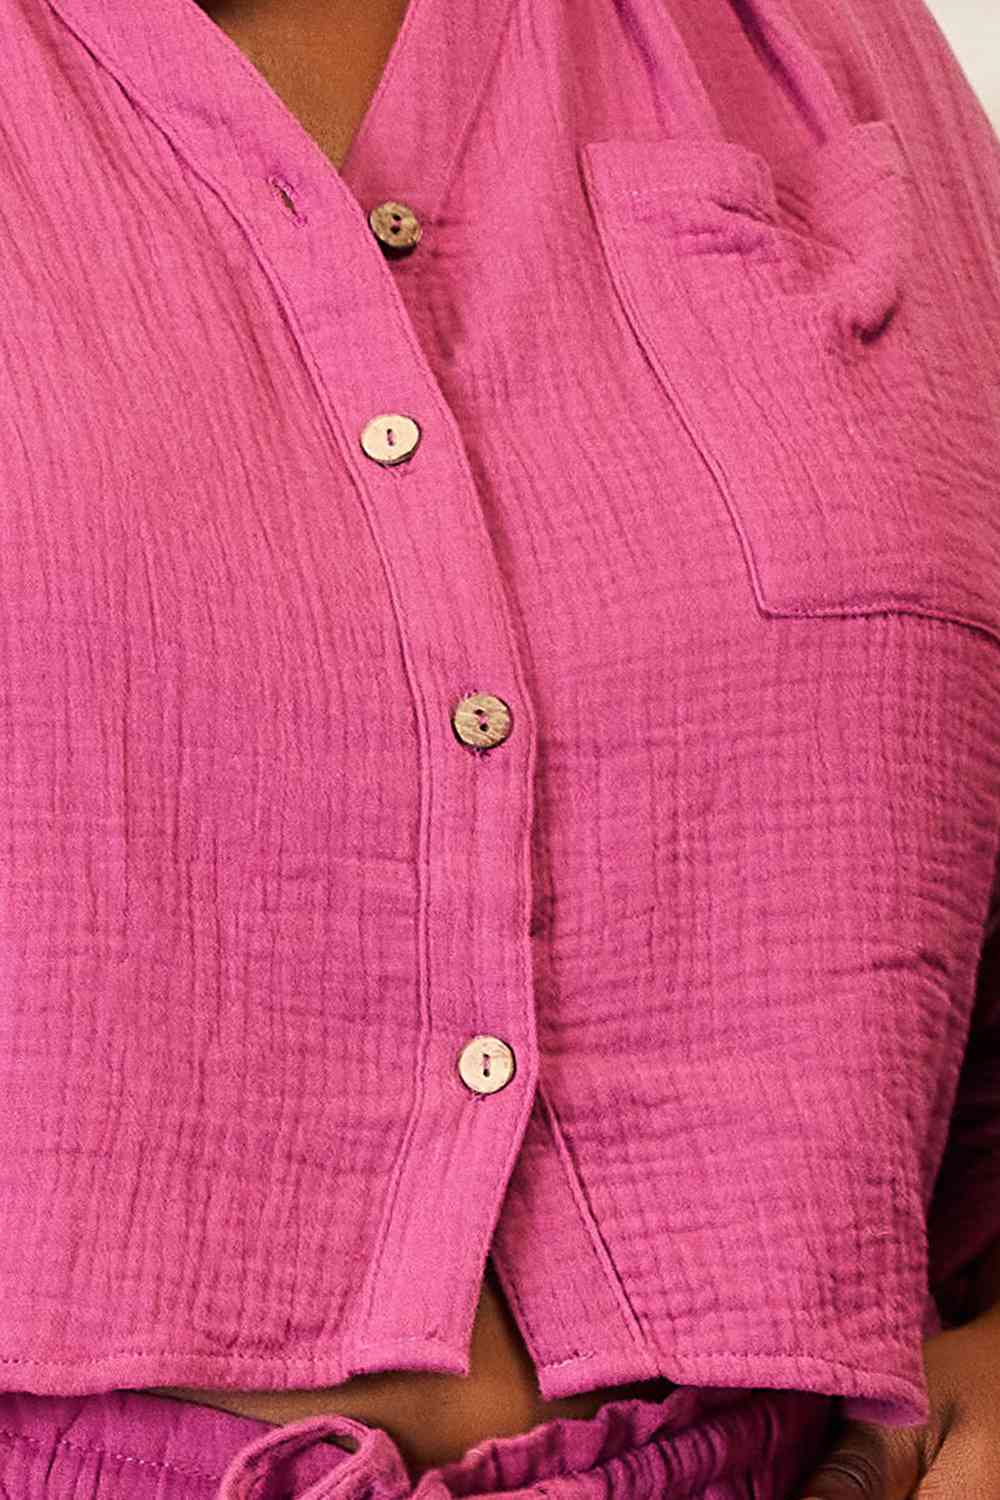 Fuchsia Buttoned Long Sleeve Top and Shorts Set - Tigbuls Variety Fashion